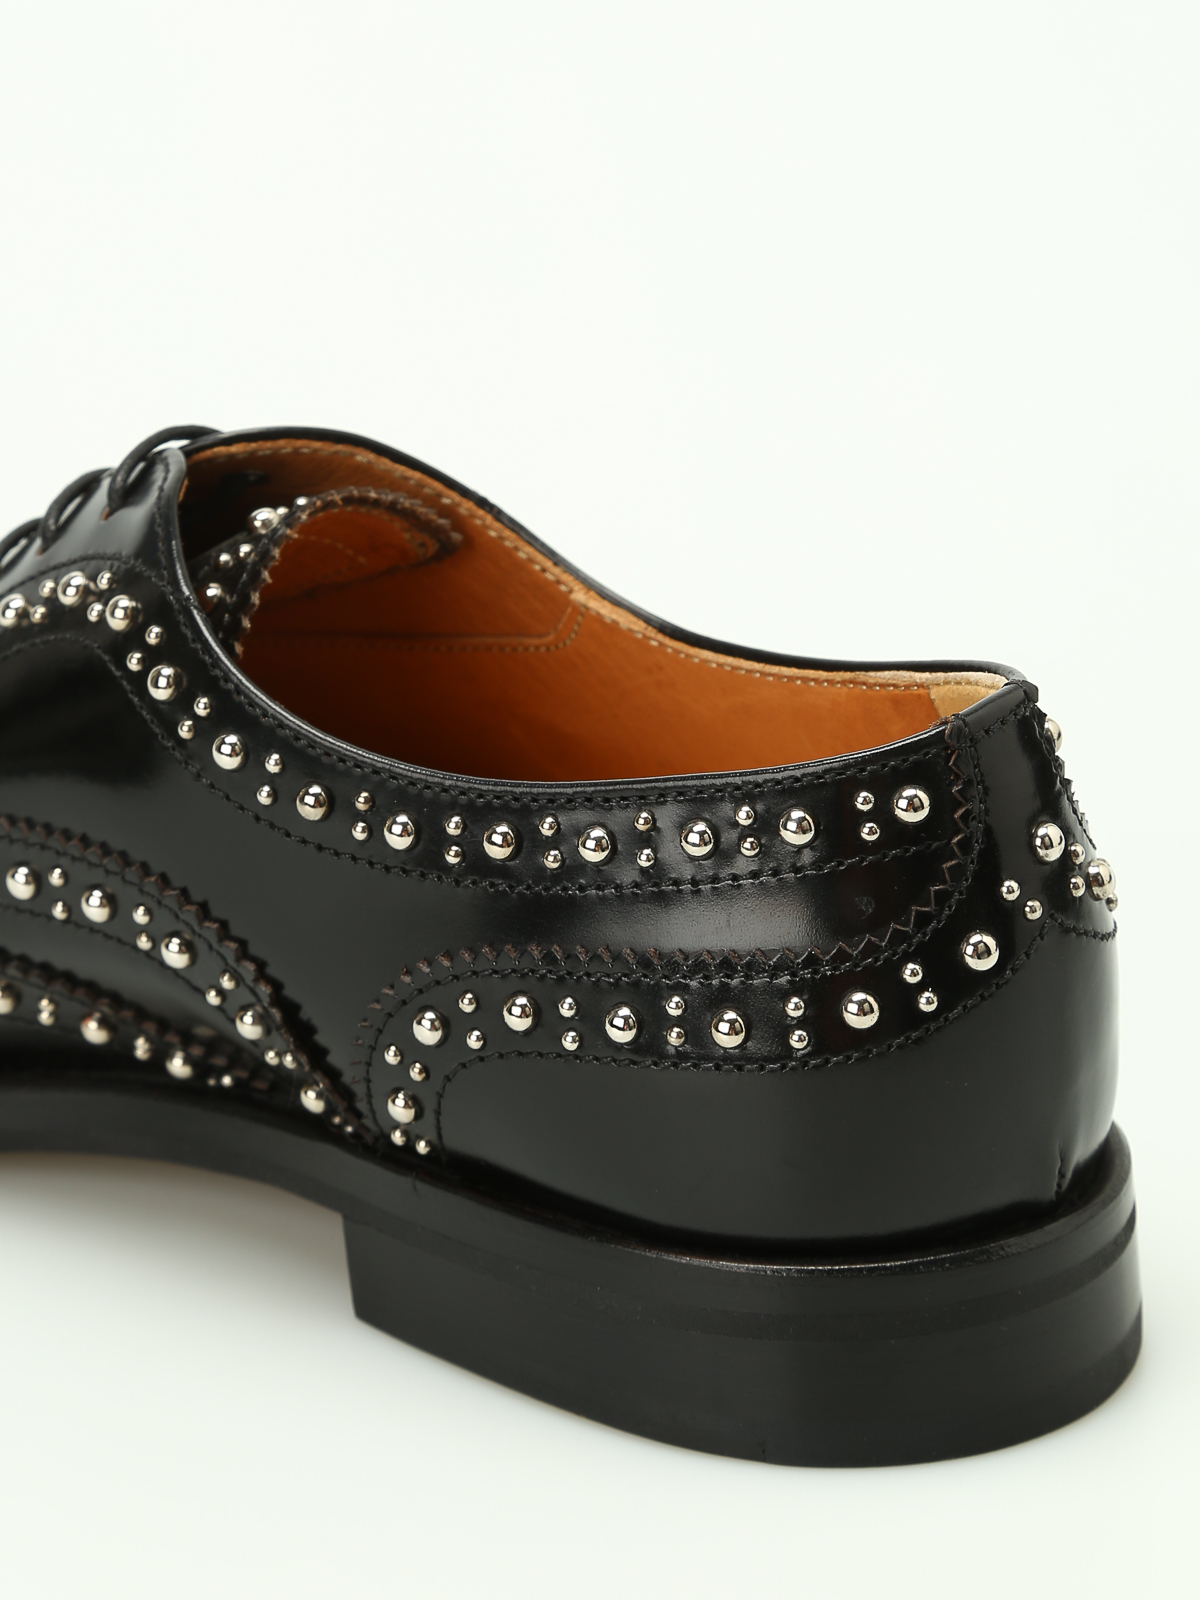 Burwood' Black Leather Brogues UK 6.5 F - Abbot's Shoes